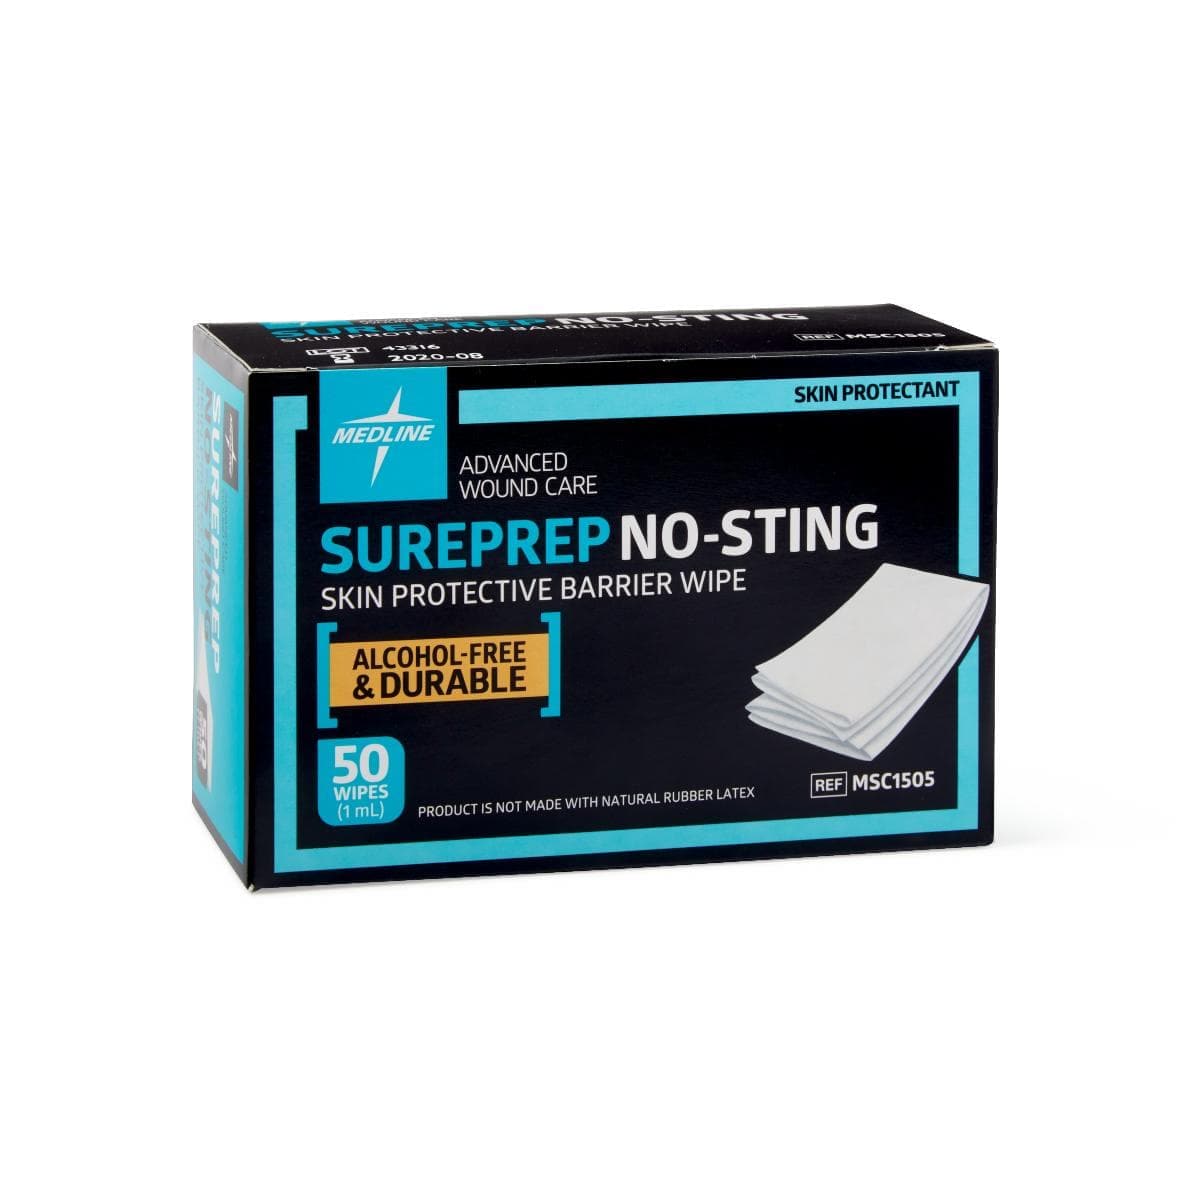 Medline Box of 50 / 1ML Medline Sureprep No-Sting Skin Protectant